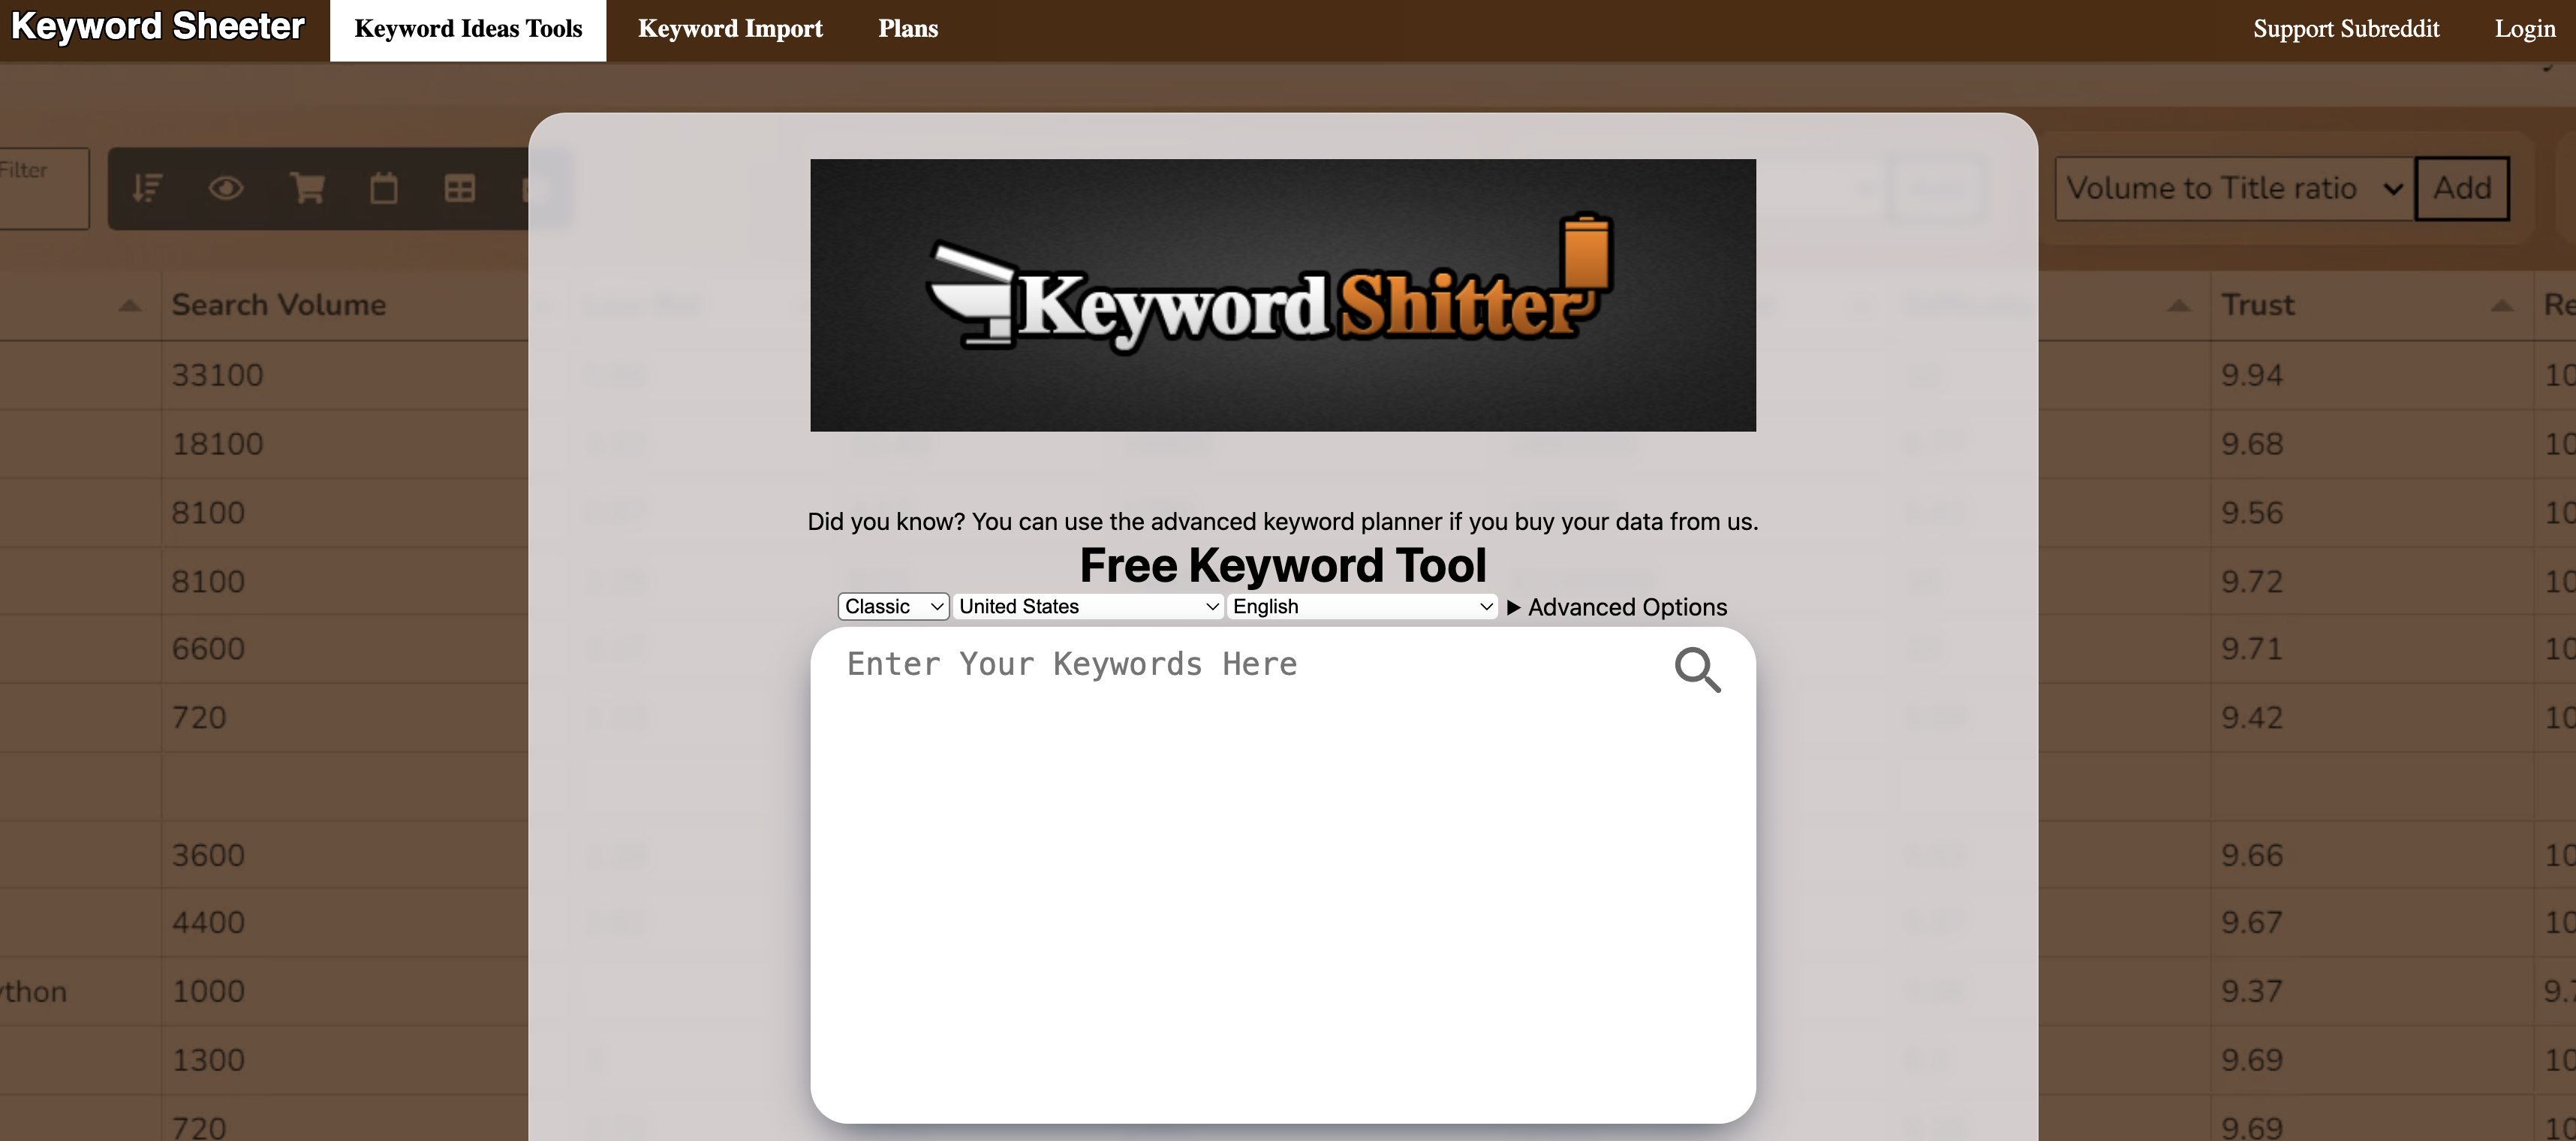 keyword sheeter website